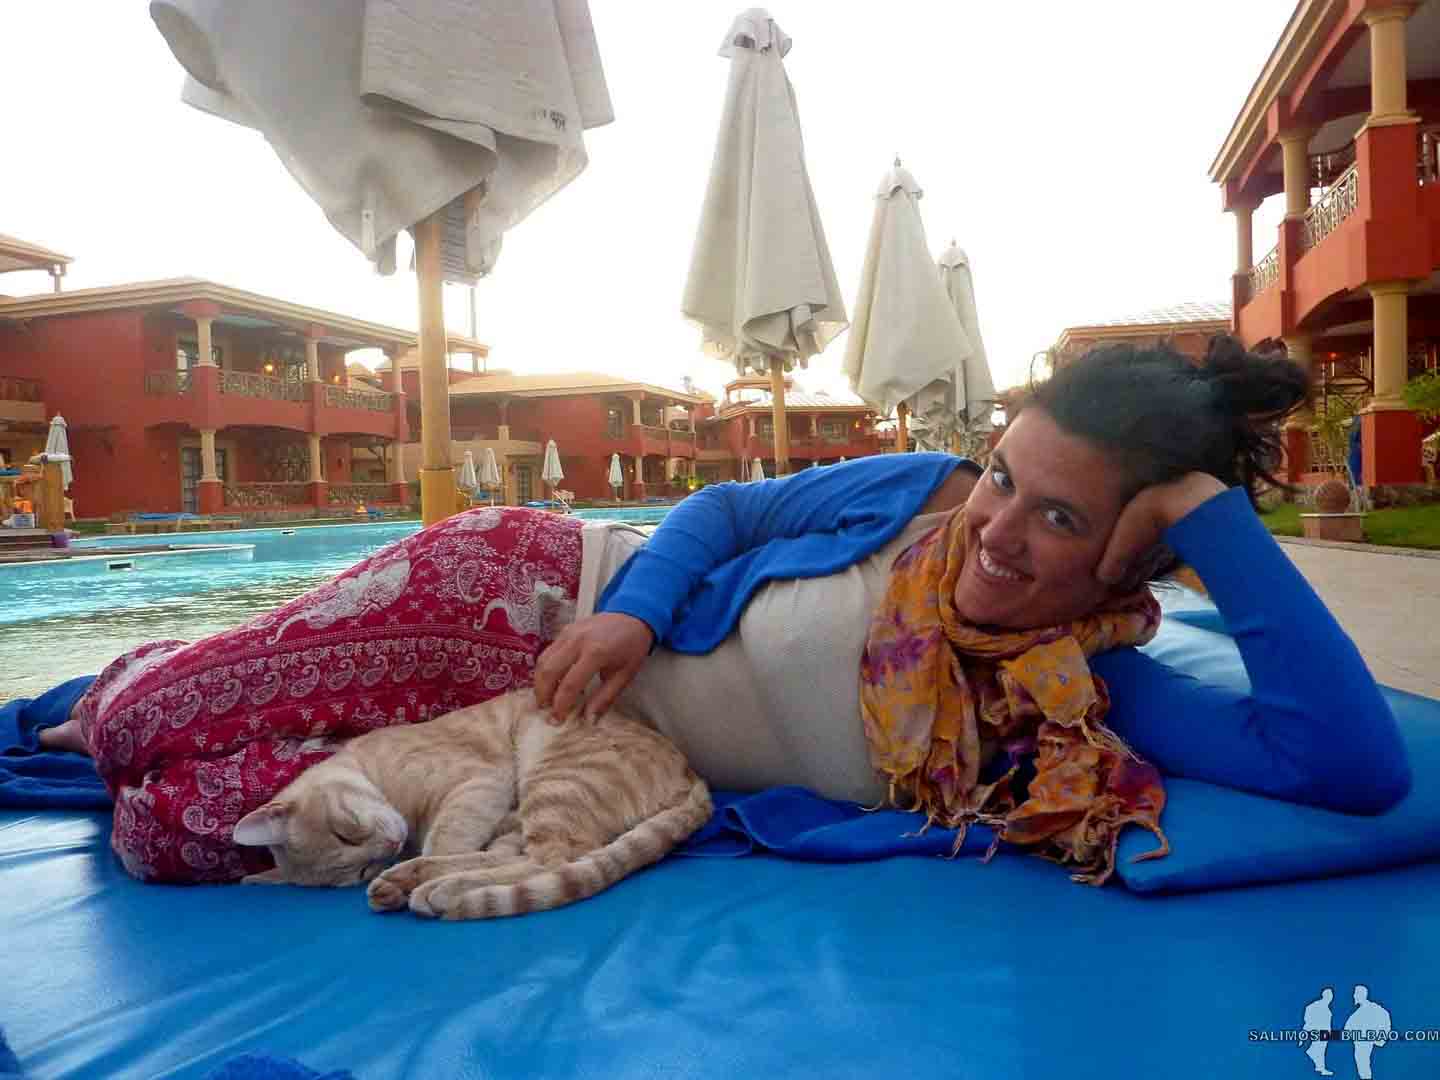 Saioa, Htl Alf Leila Wa Leila, Hurghada